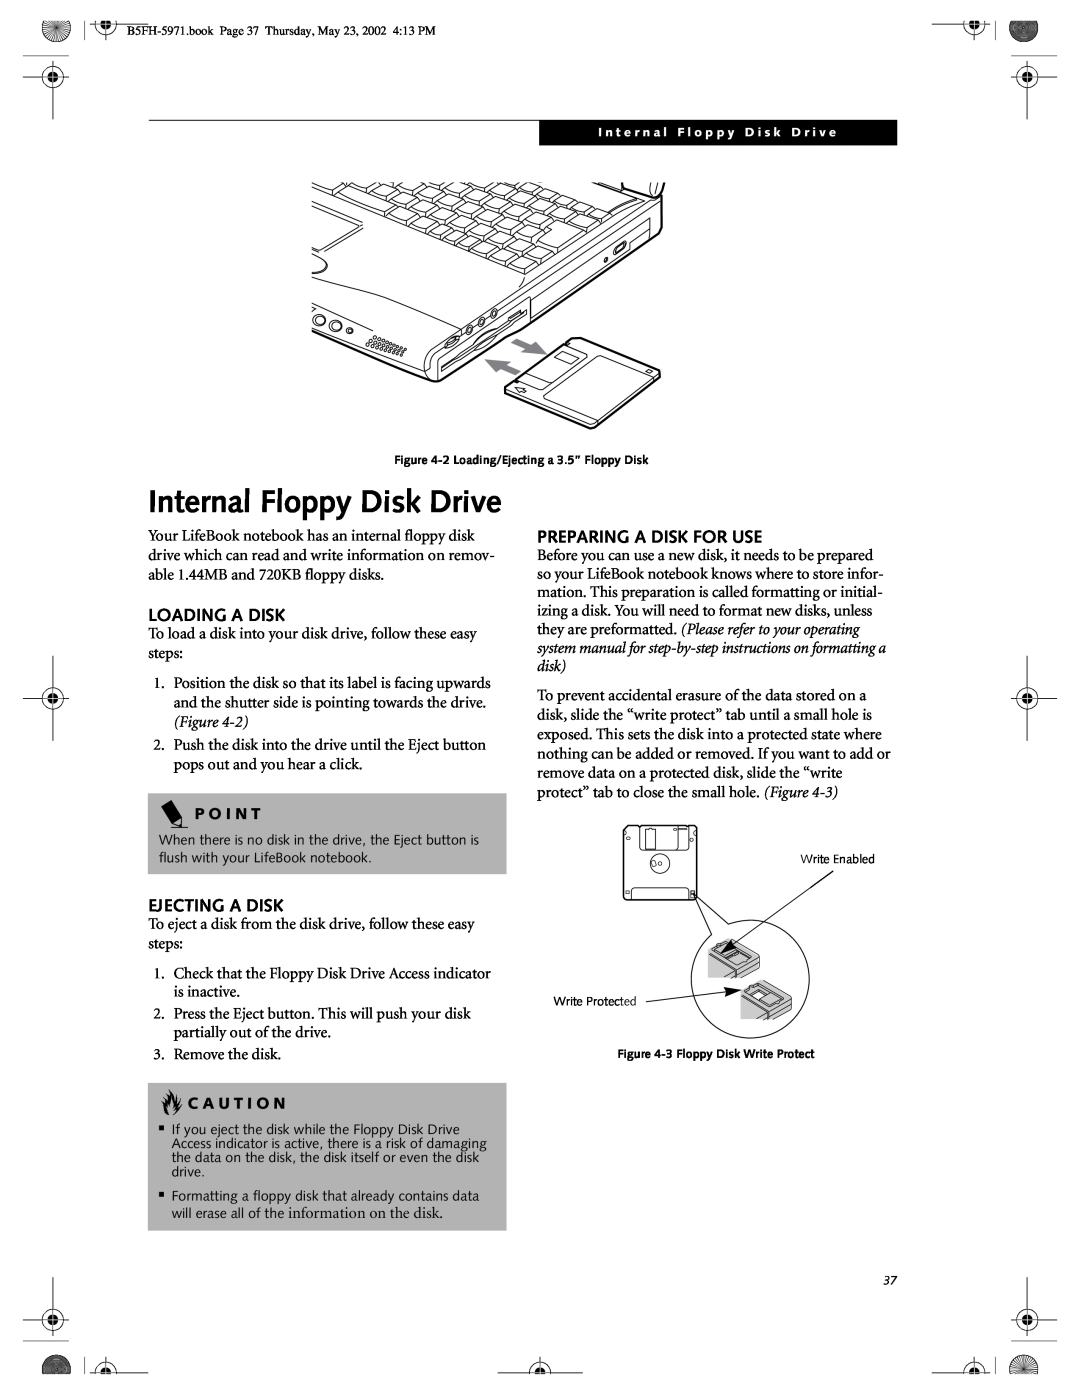 Fujitsu C2010, C2111 manual Internal Floppy Disk Drive, Loading A Disk, Ejecting A Disk, Preparing A Disk For Use, P O I N T 